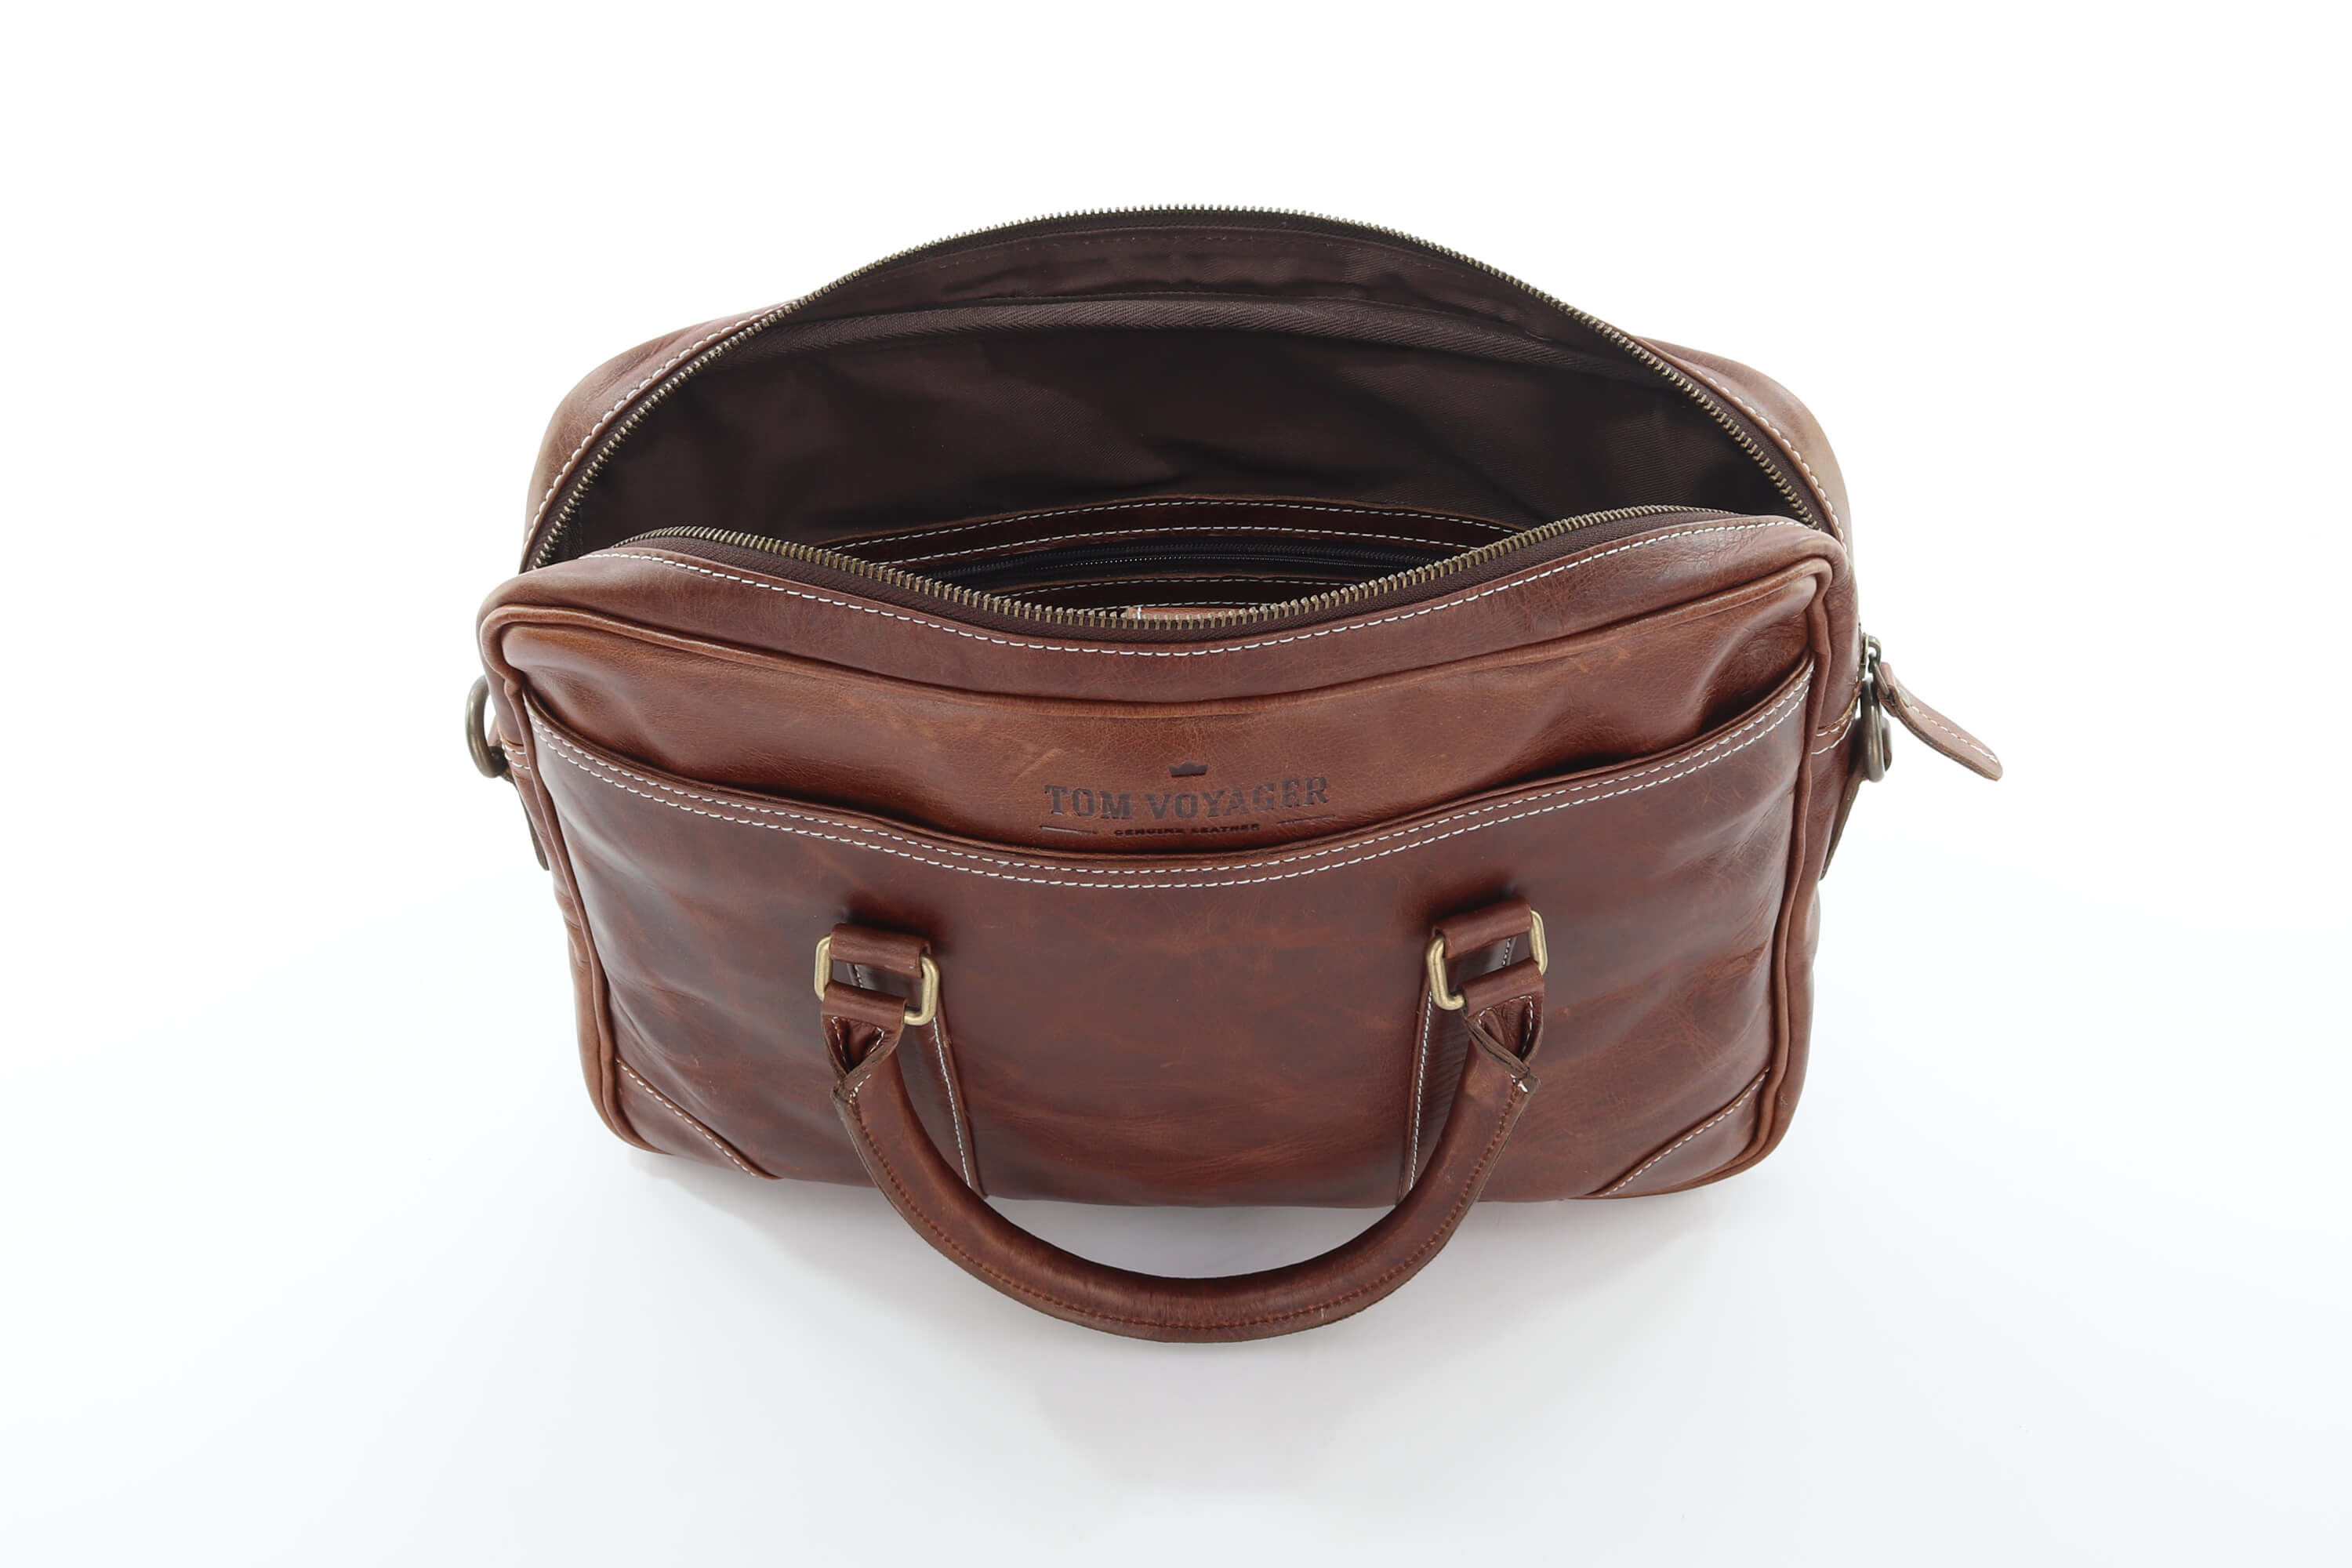 Hayden Leather Bag - Dark Brown